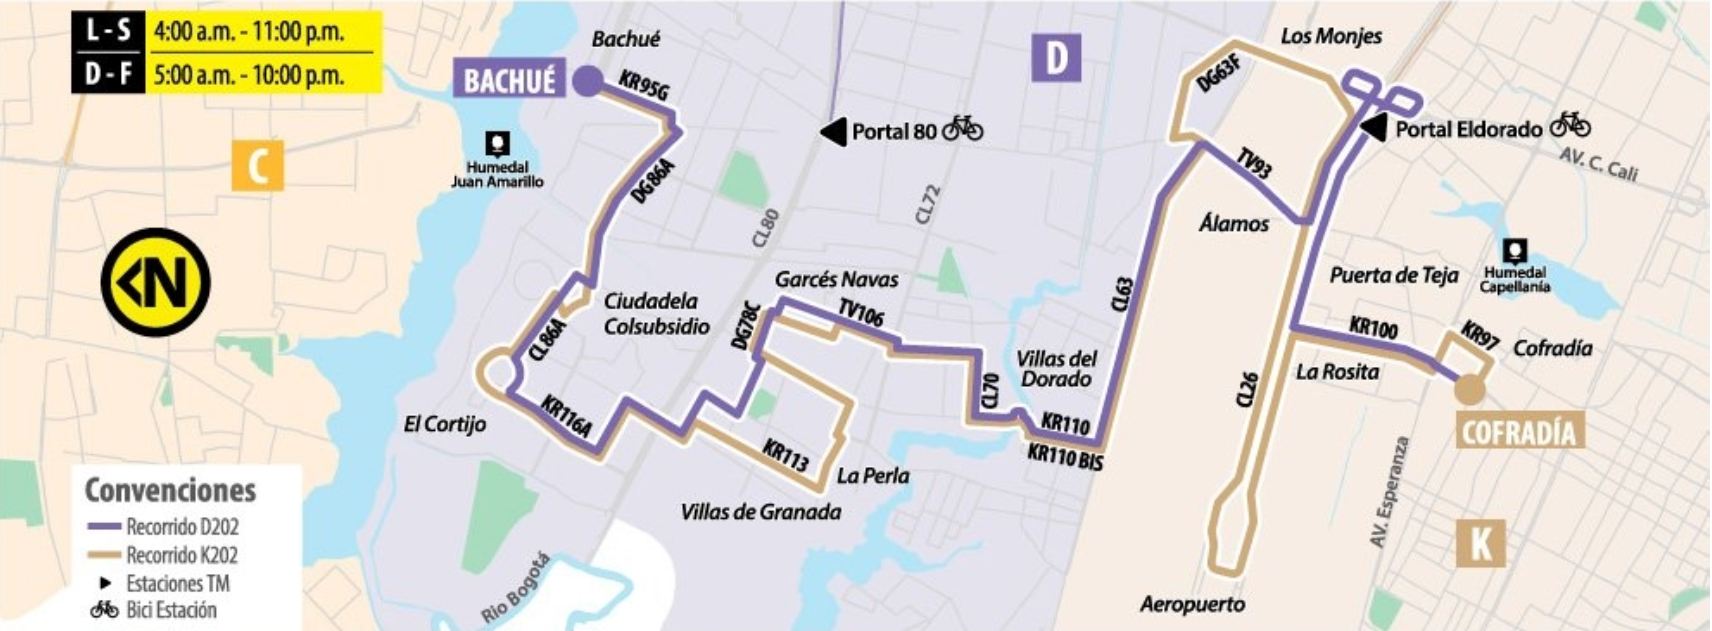 D202-K202 Bachué - Cofradía, mapa bus urbano Bogotá